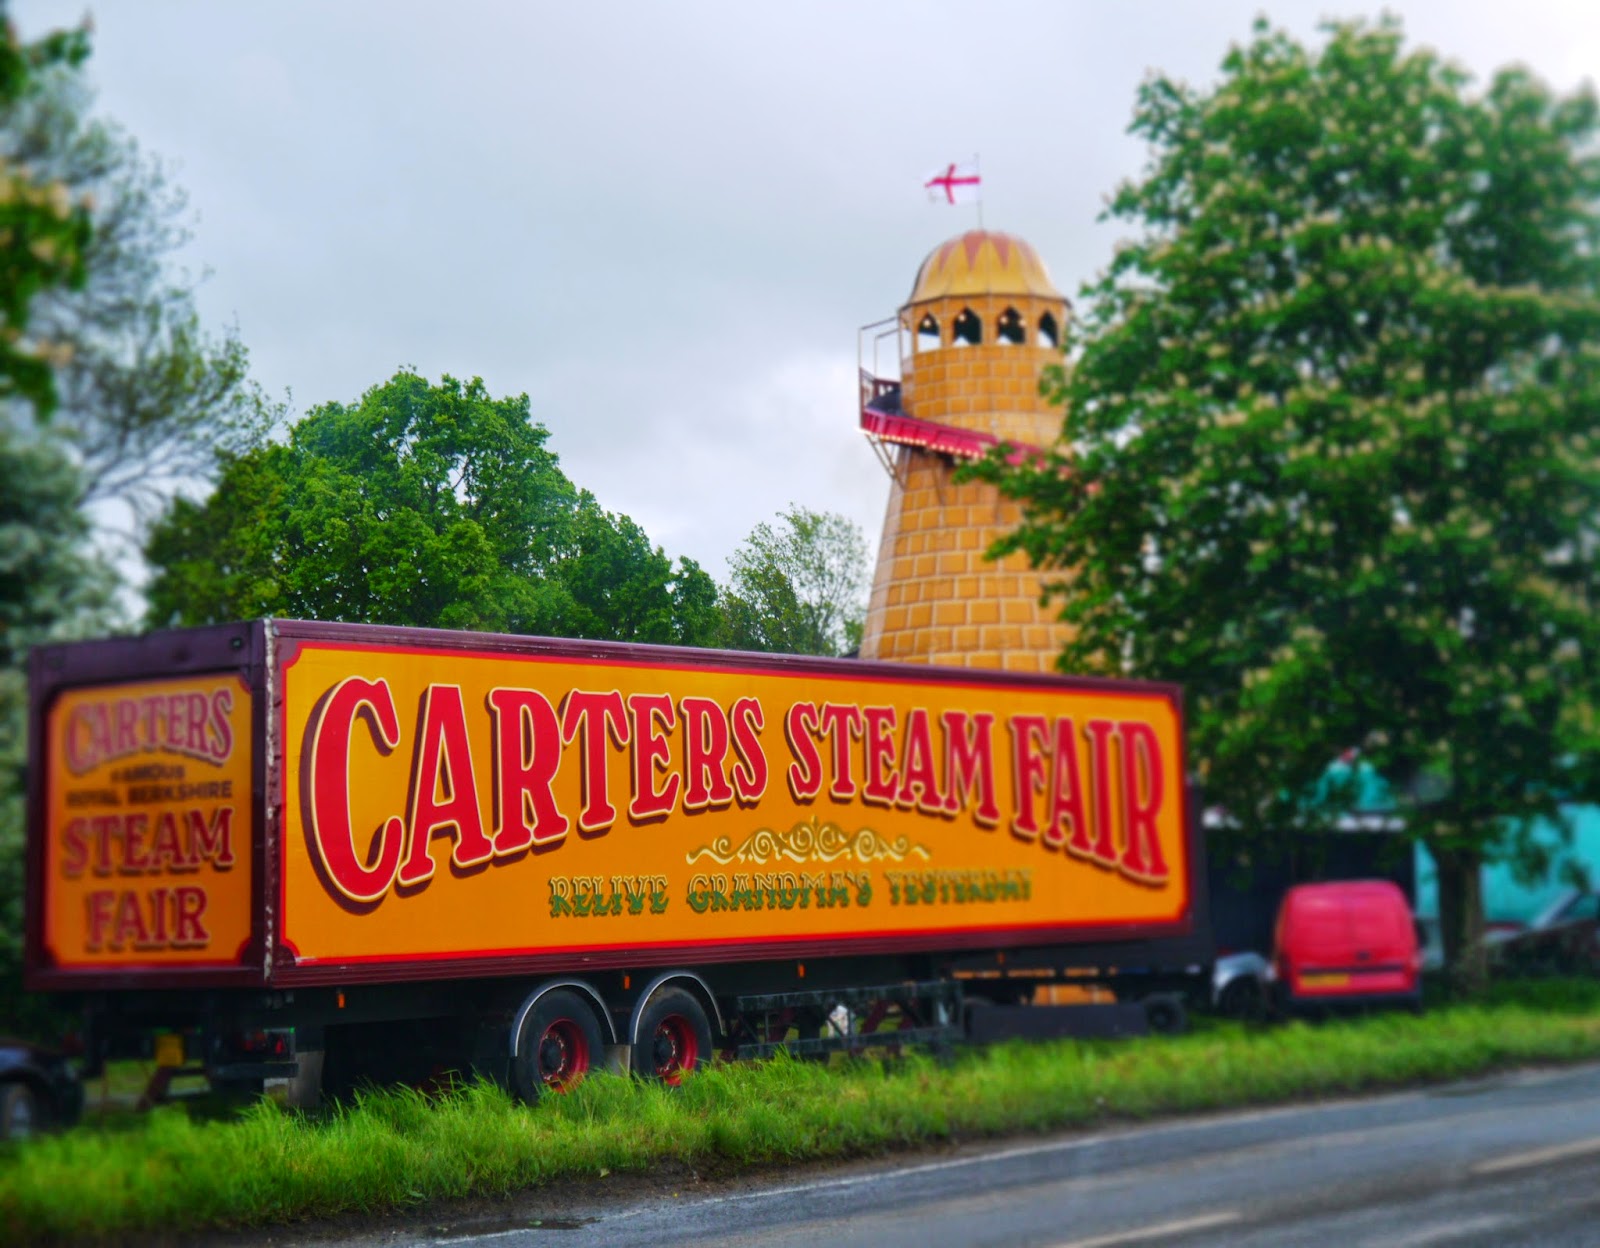 Carters Steam Fair at Pinkneys Green